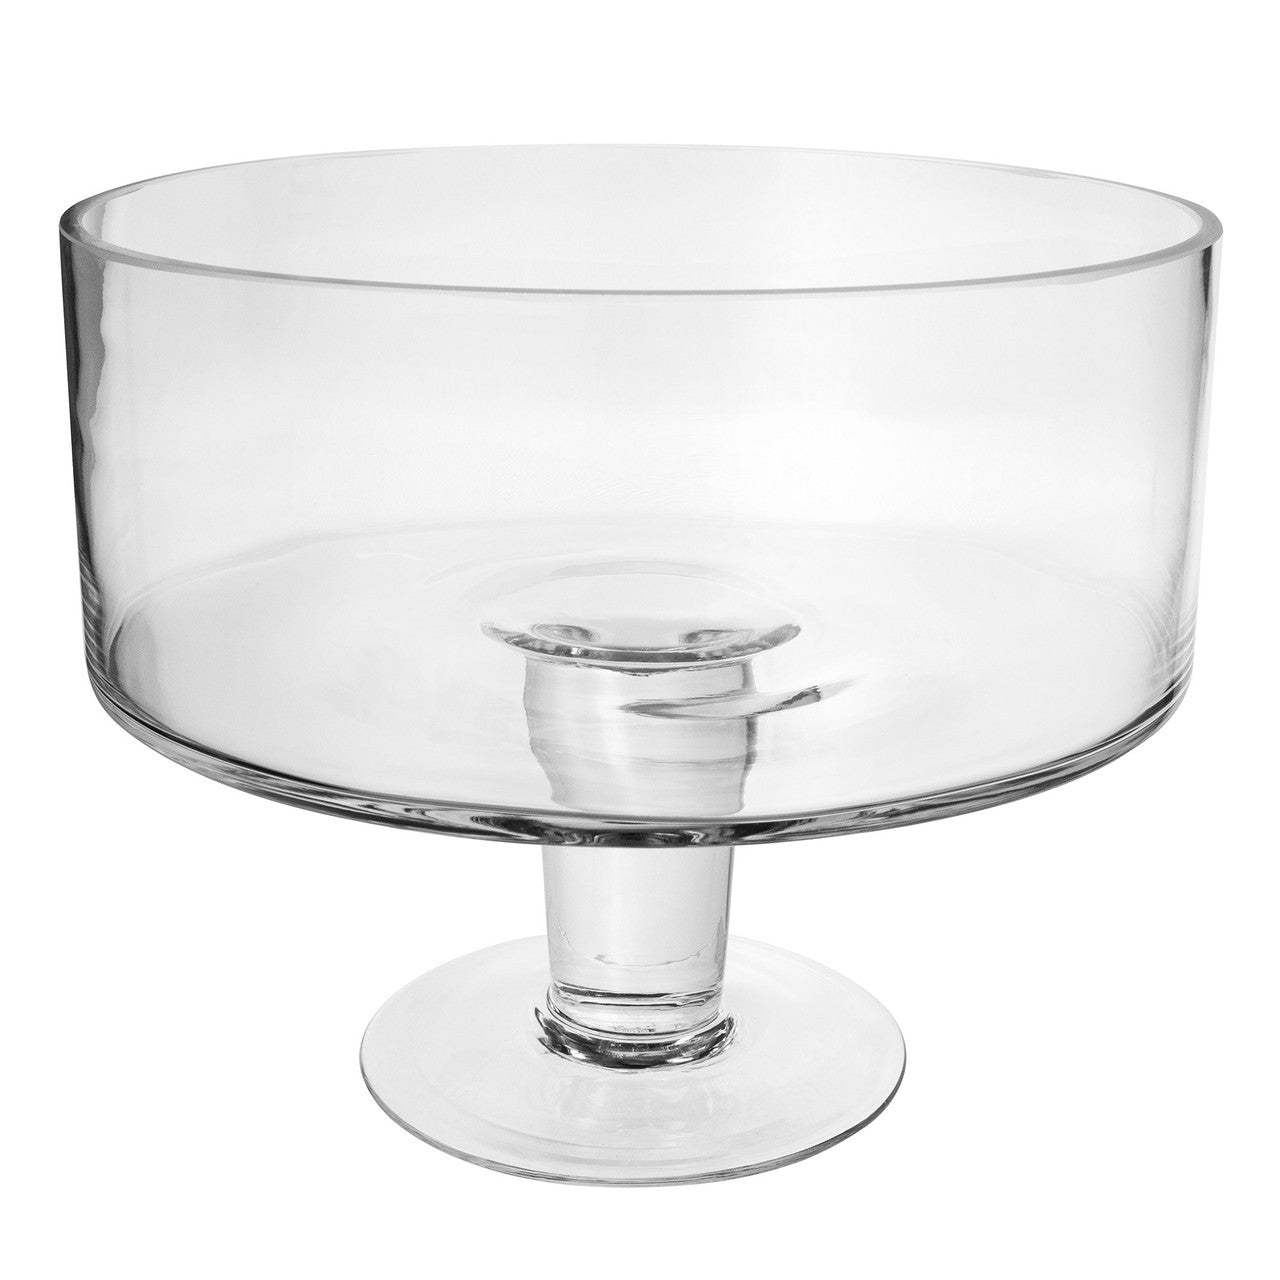 Highlands Trifle Bowl - 4.75 Litre